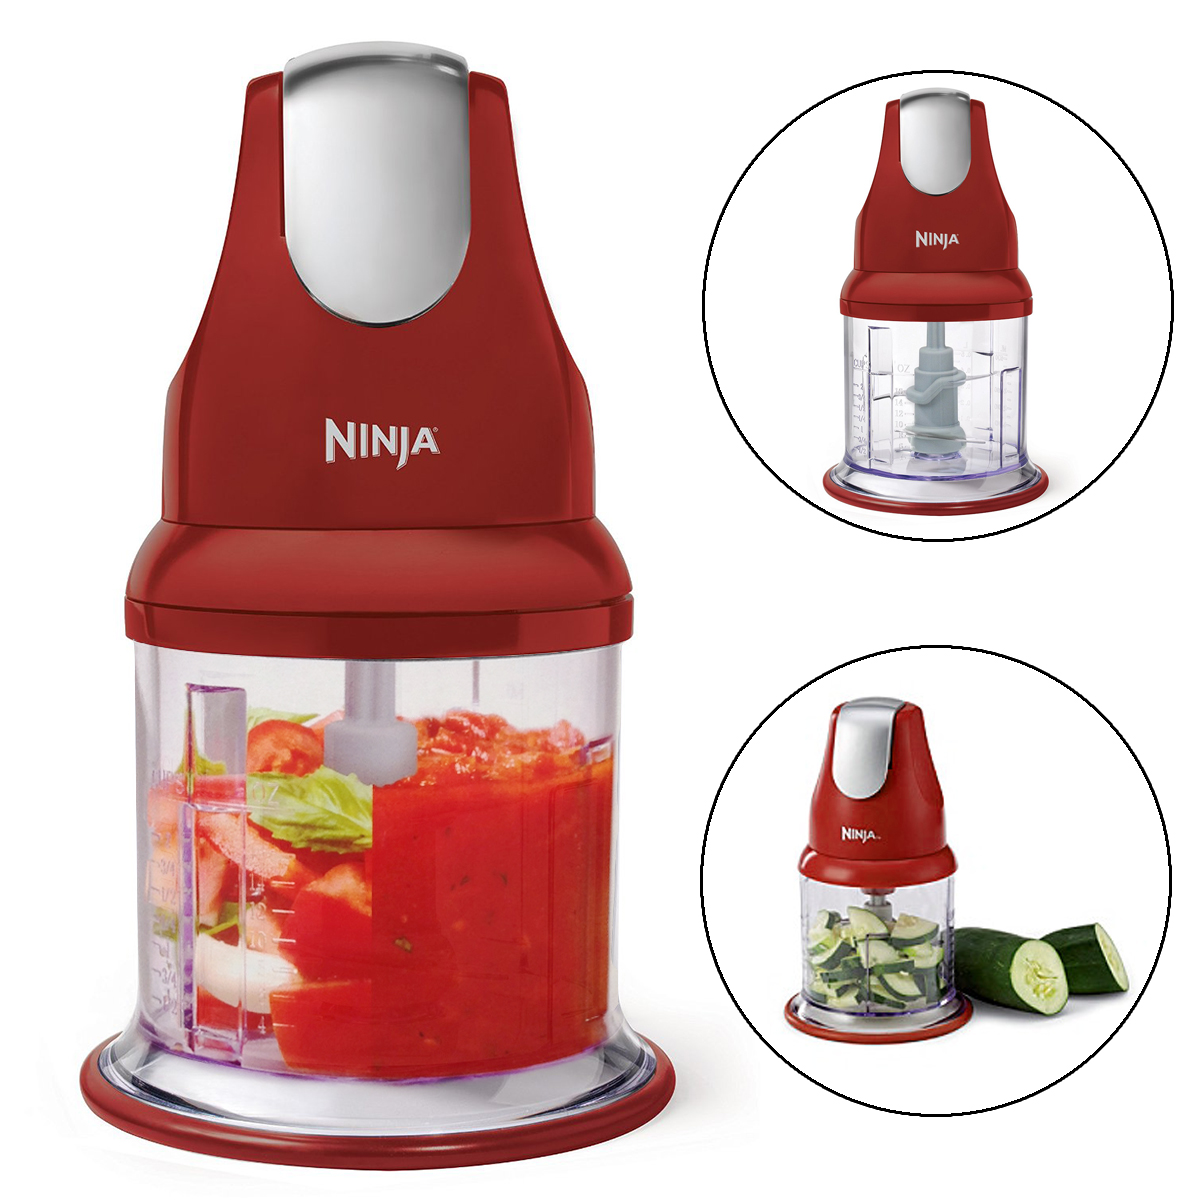 Ninja Express Chopper - Red (NJ100) - image 1 of 2